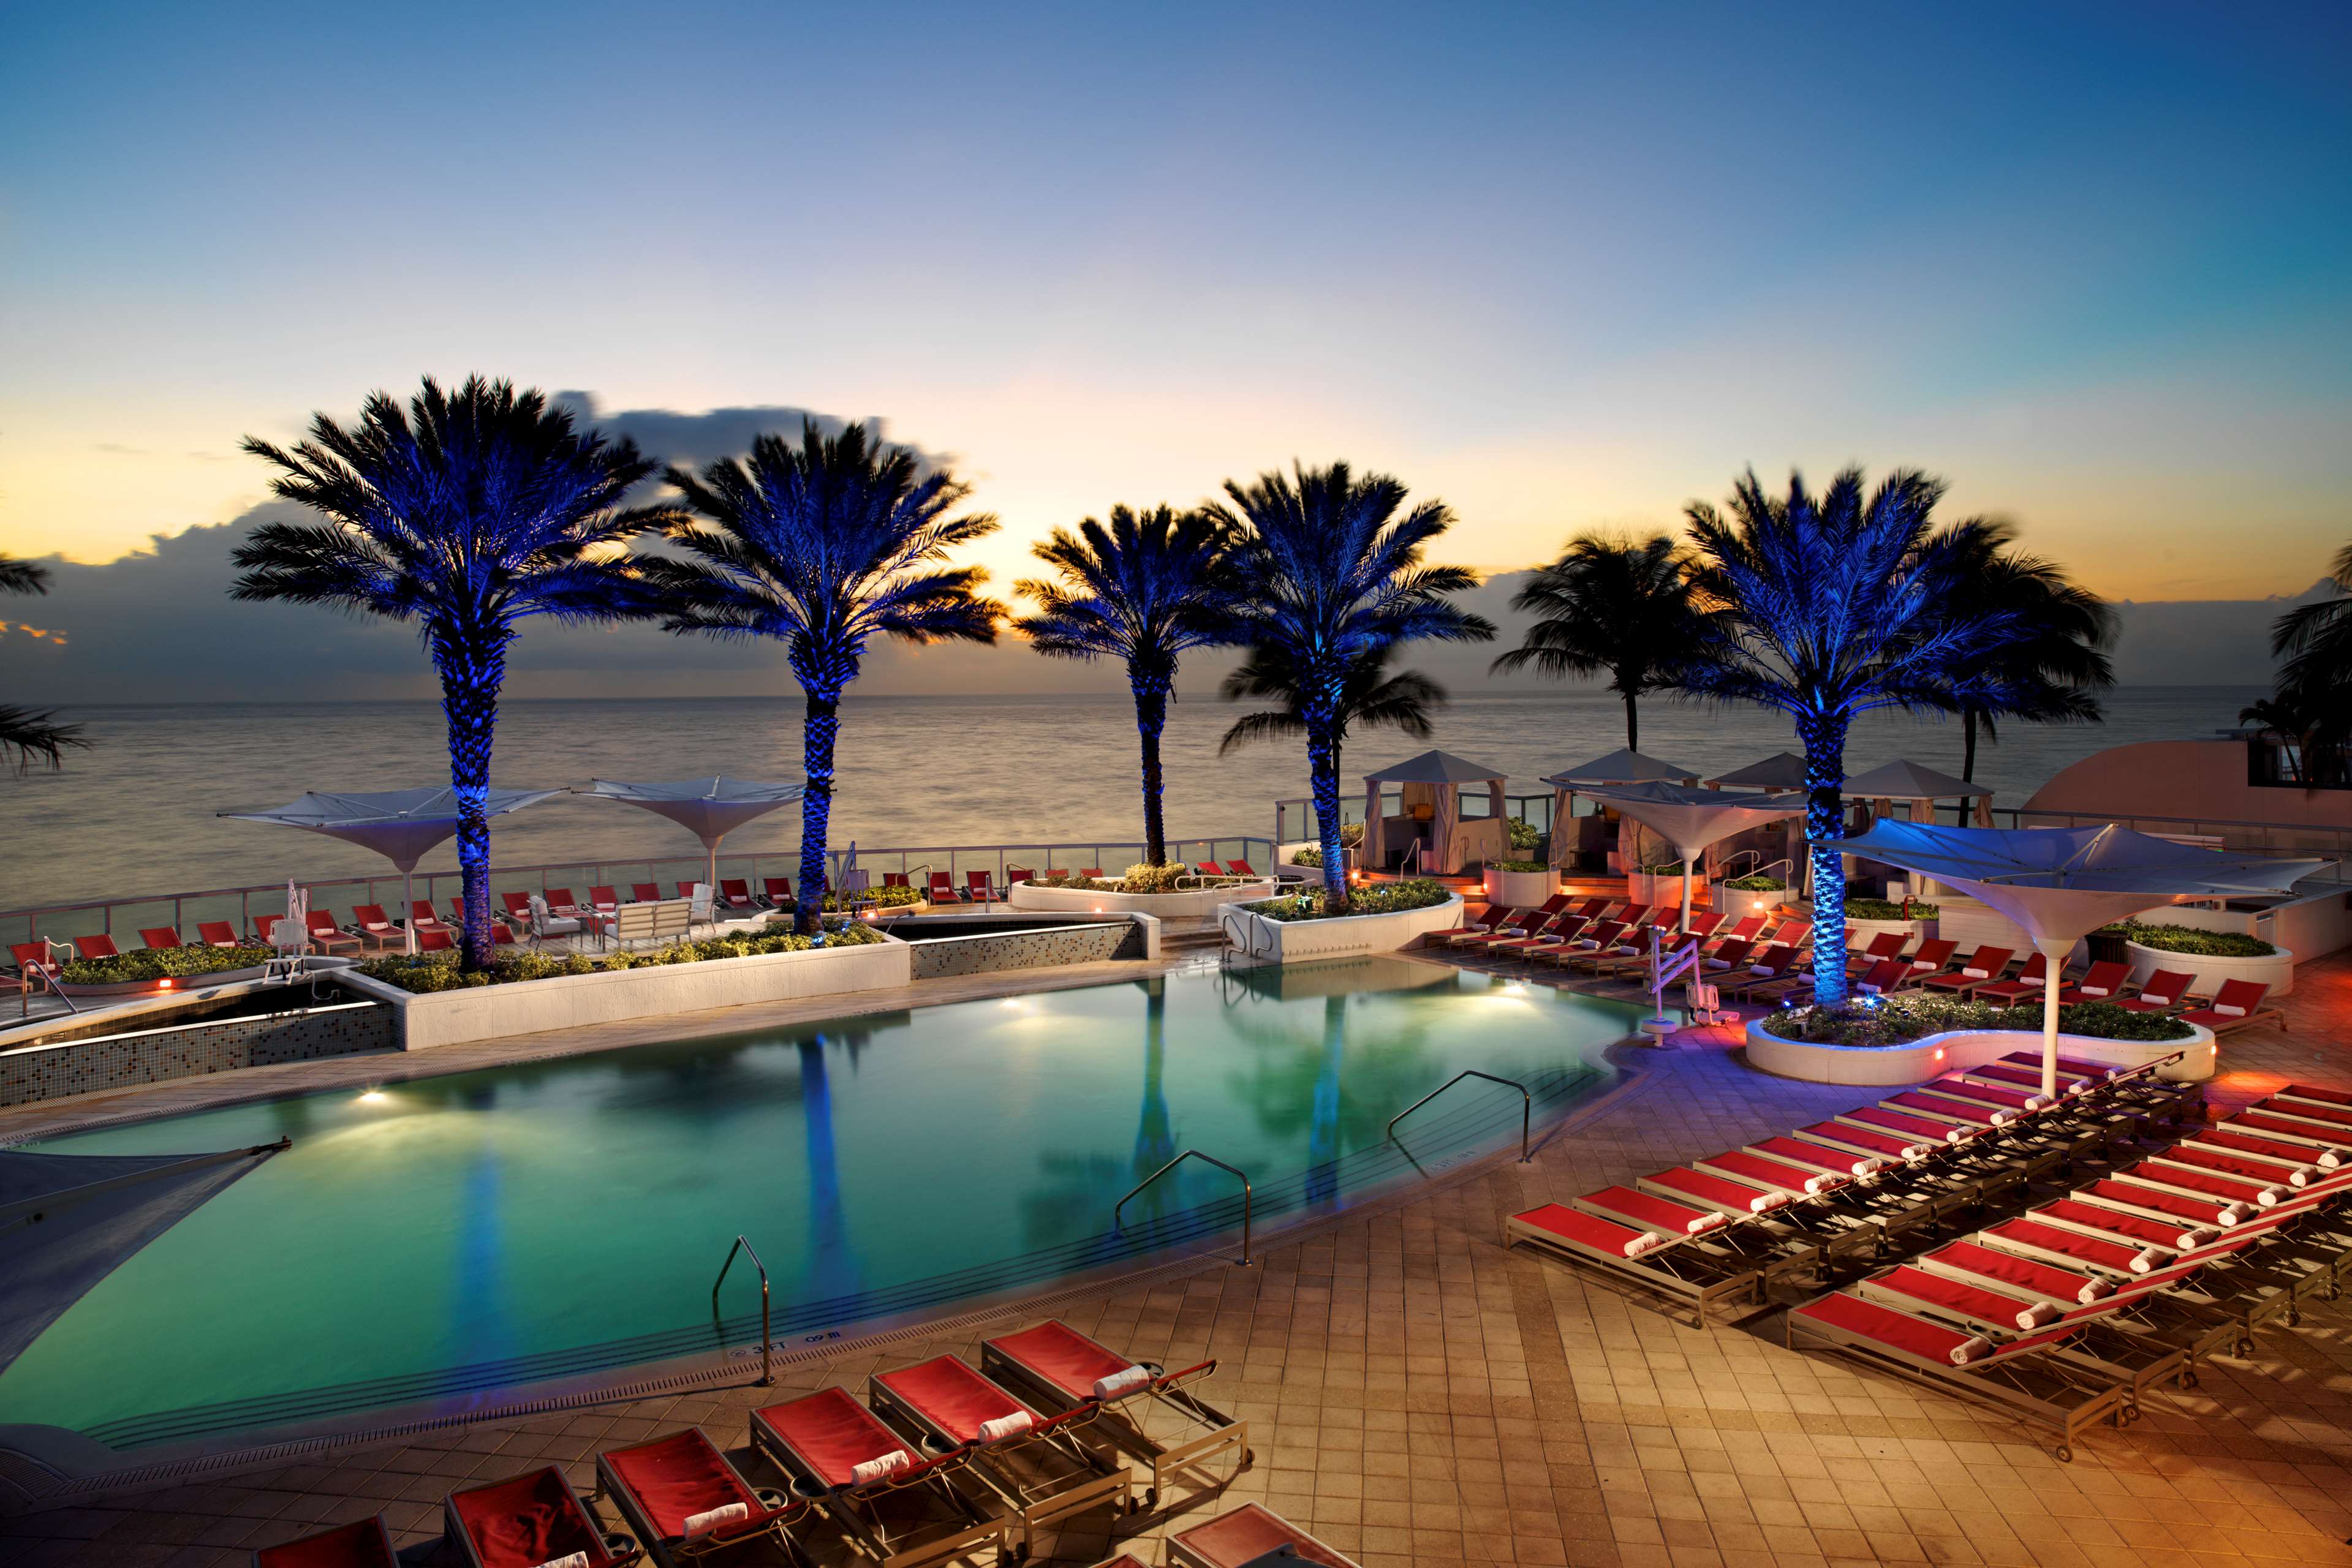 Hilton Fort Lauderdale Beach Resort Photo